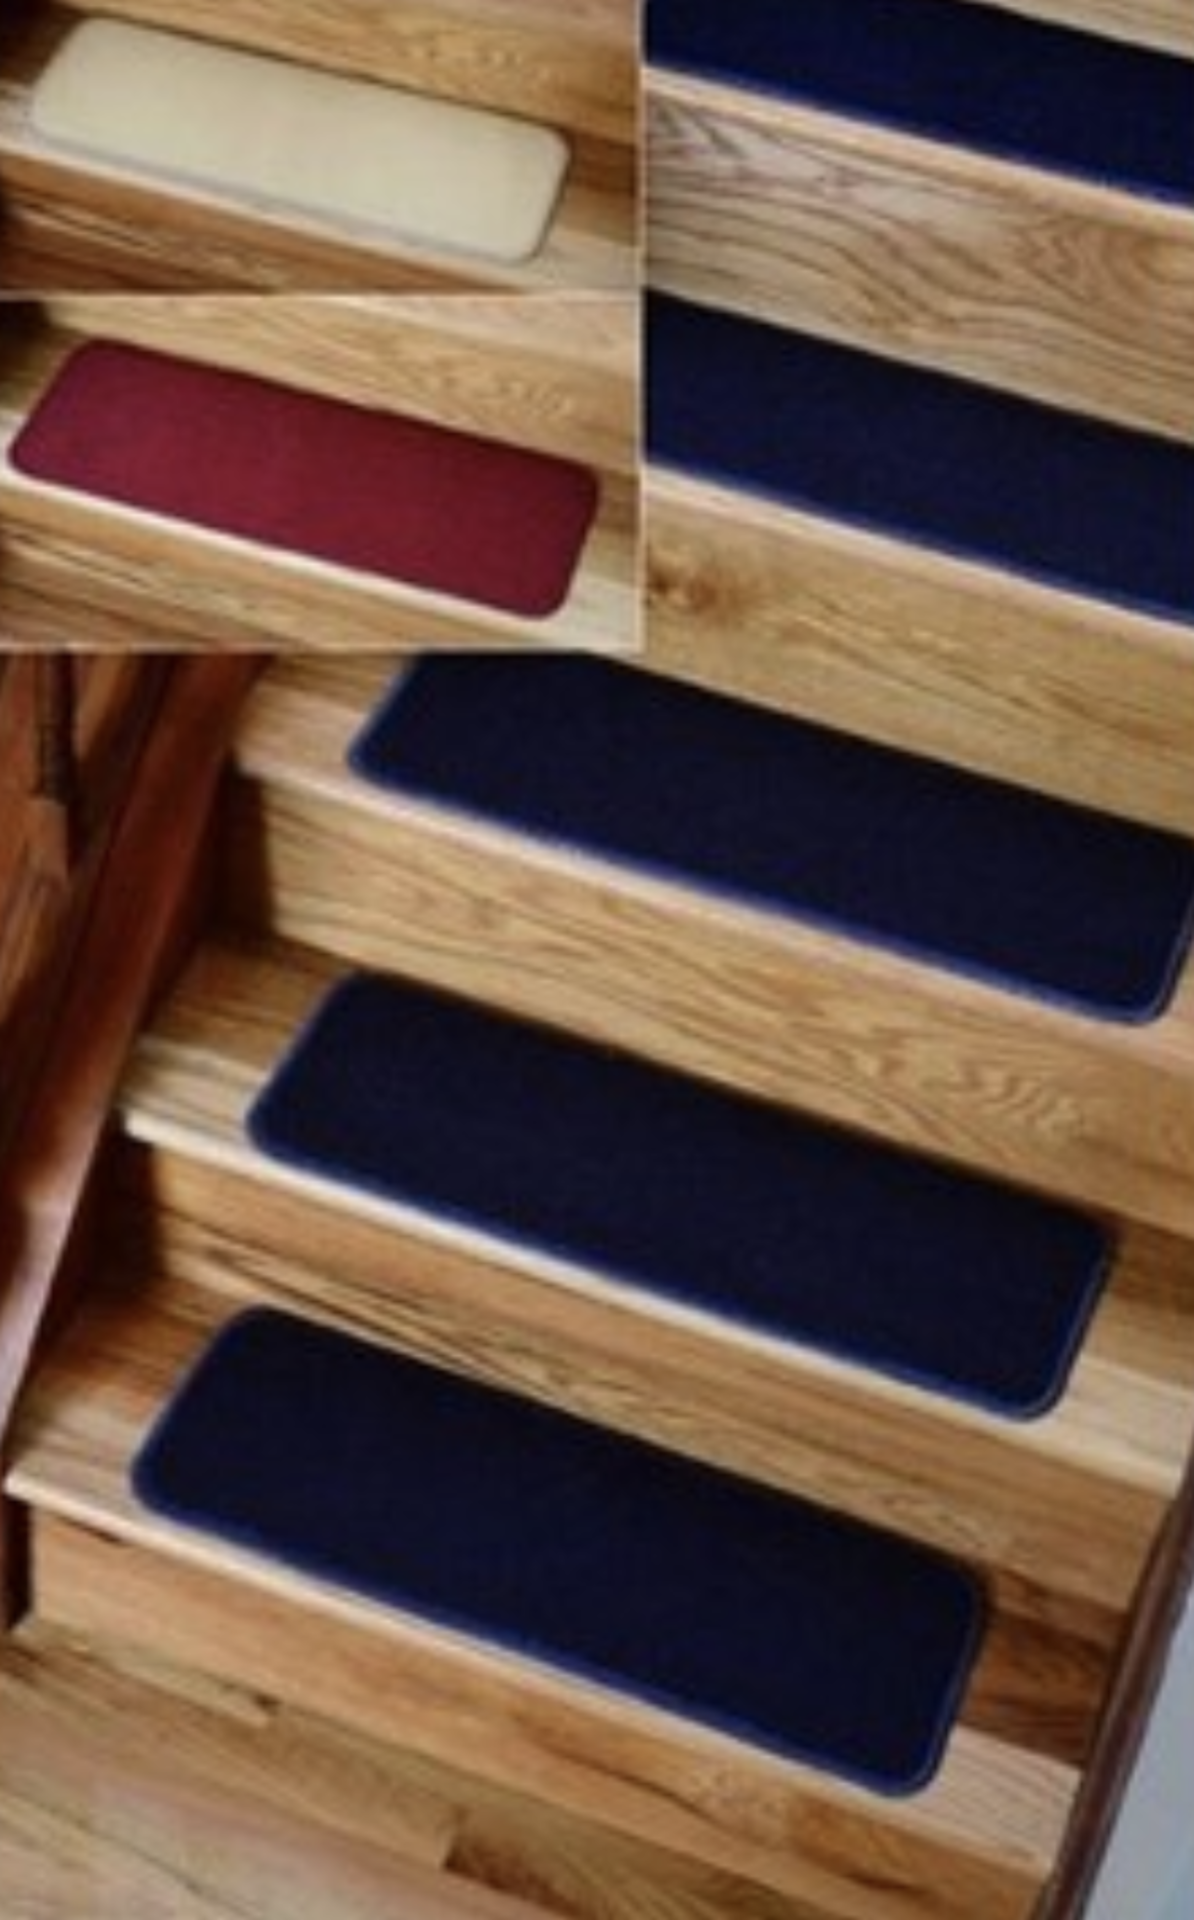 40 Sets of Rug Carpet Pads, 2 Master Cases Solid Blue Stair Treads Set Of 4, Color: Blue